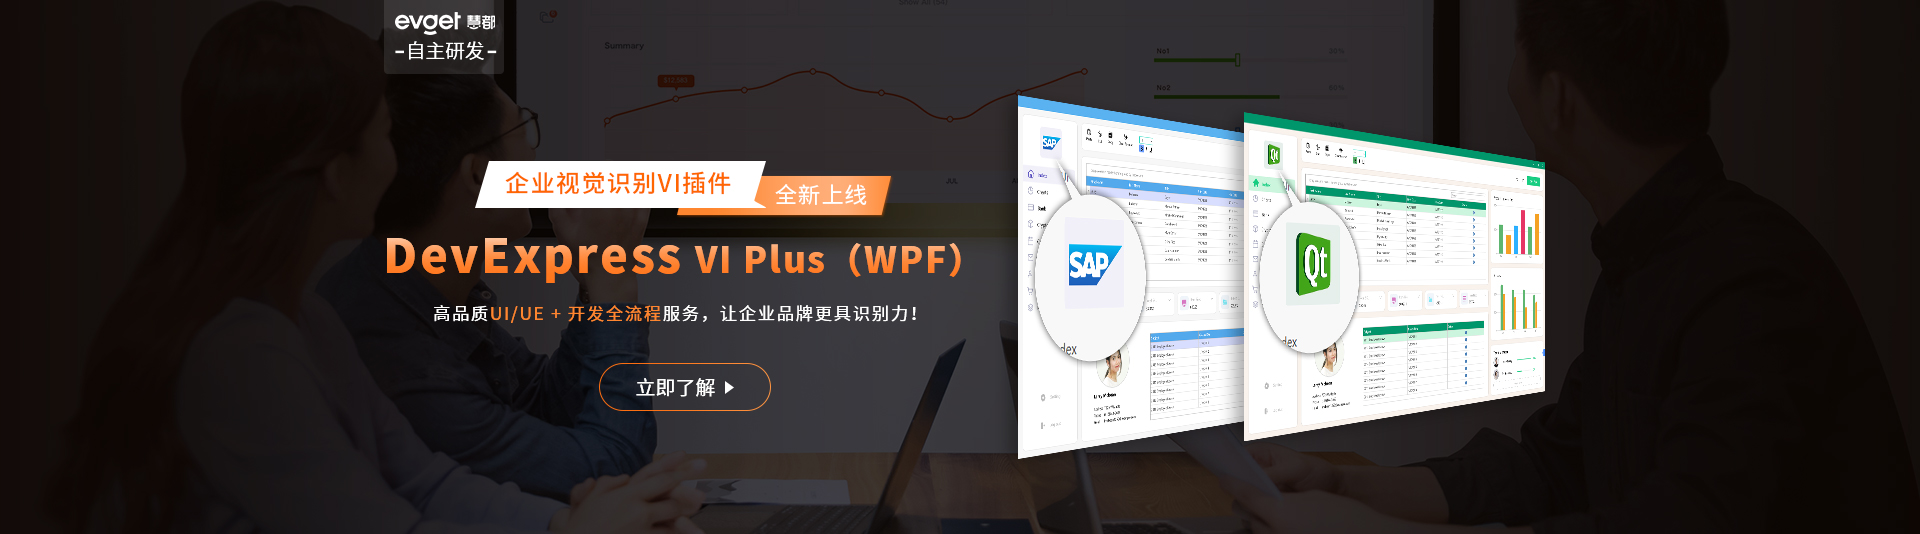 DevExpress WPF企业视觉识别插件全新上线